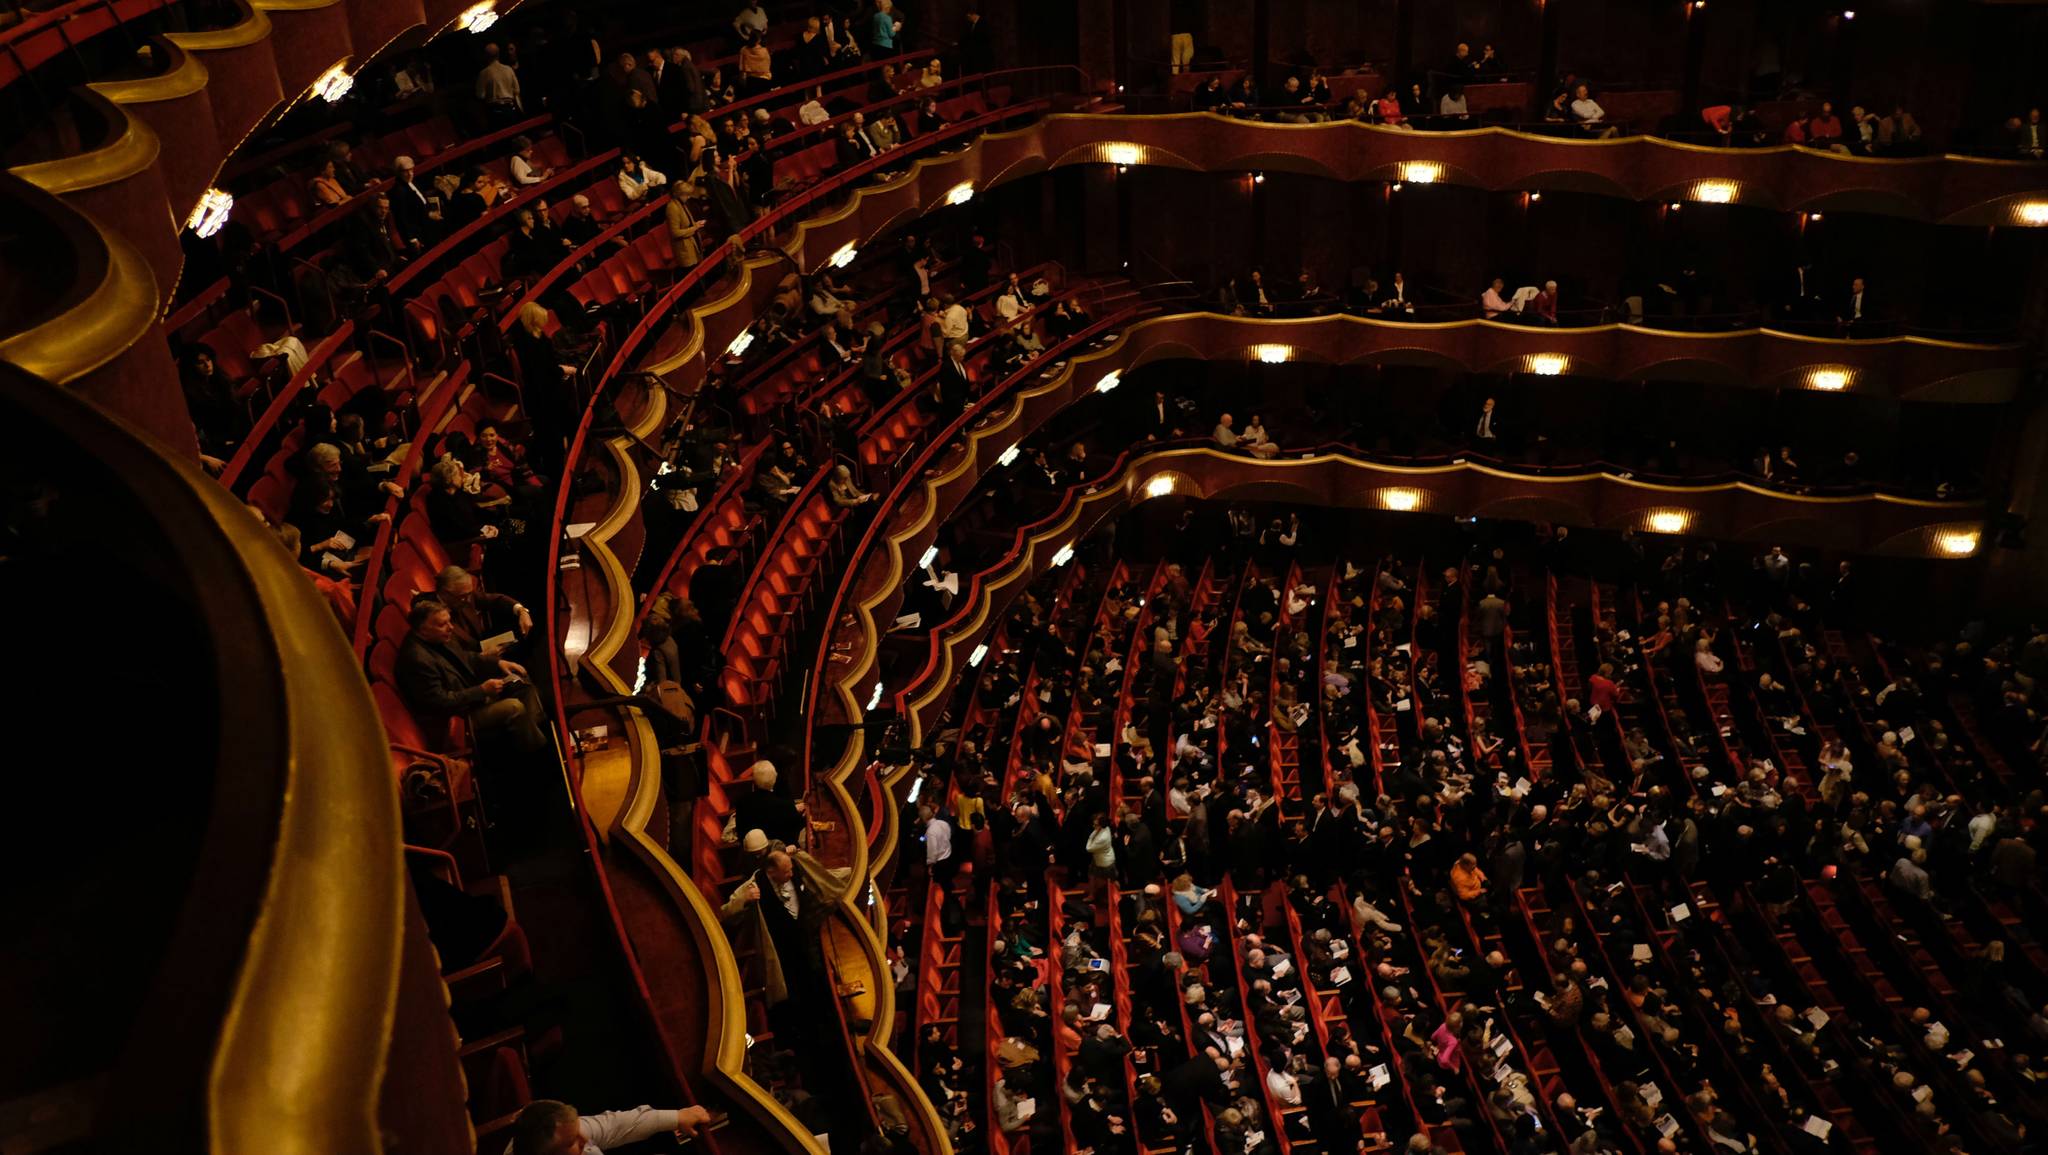 Metropolitan Opera streams shows for art dabblers